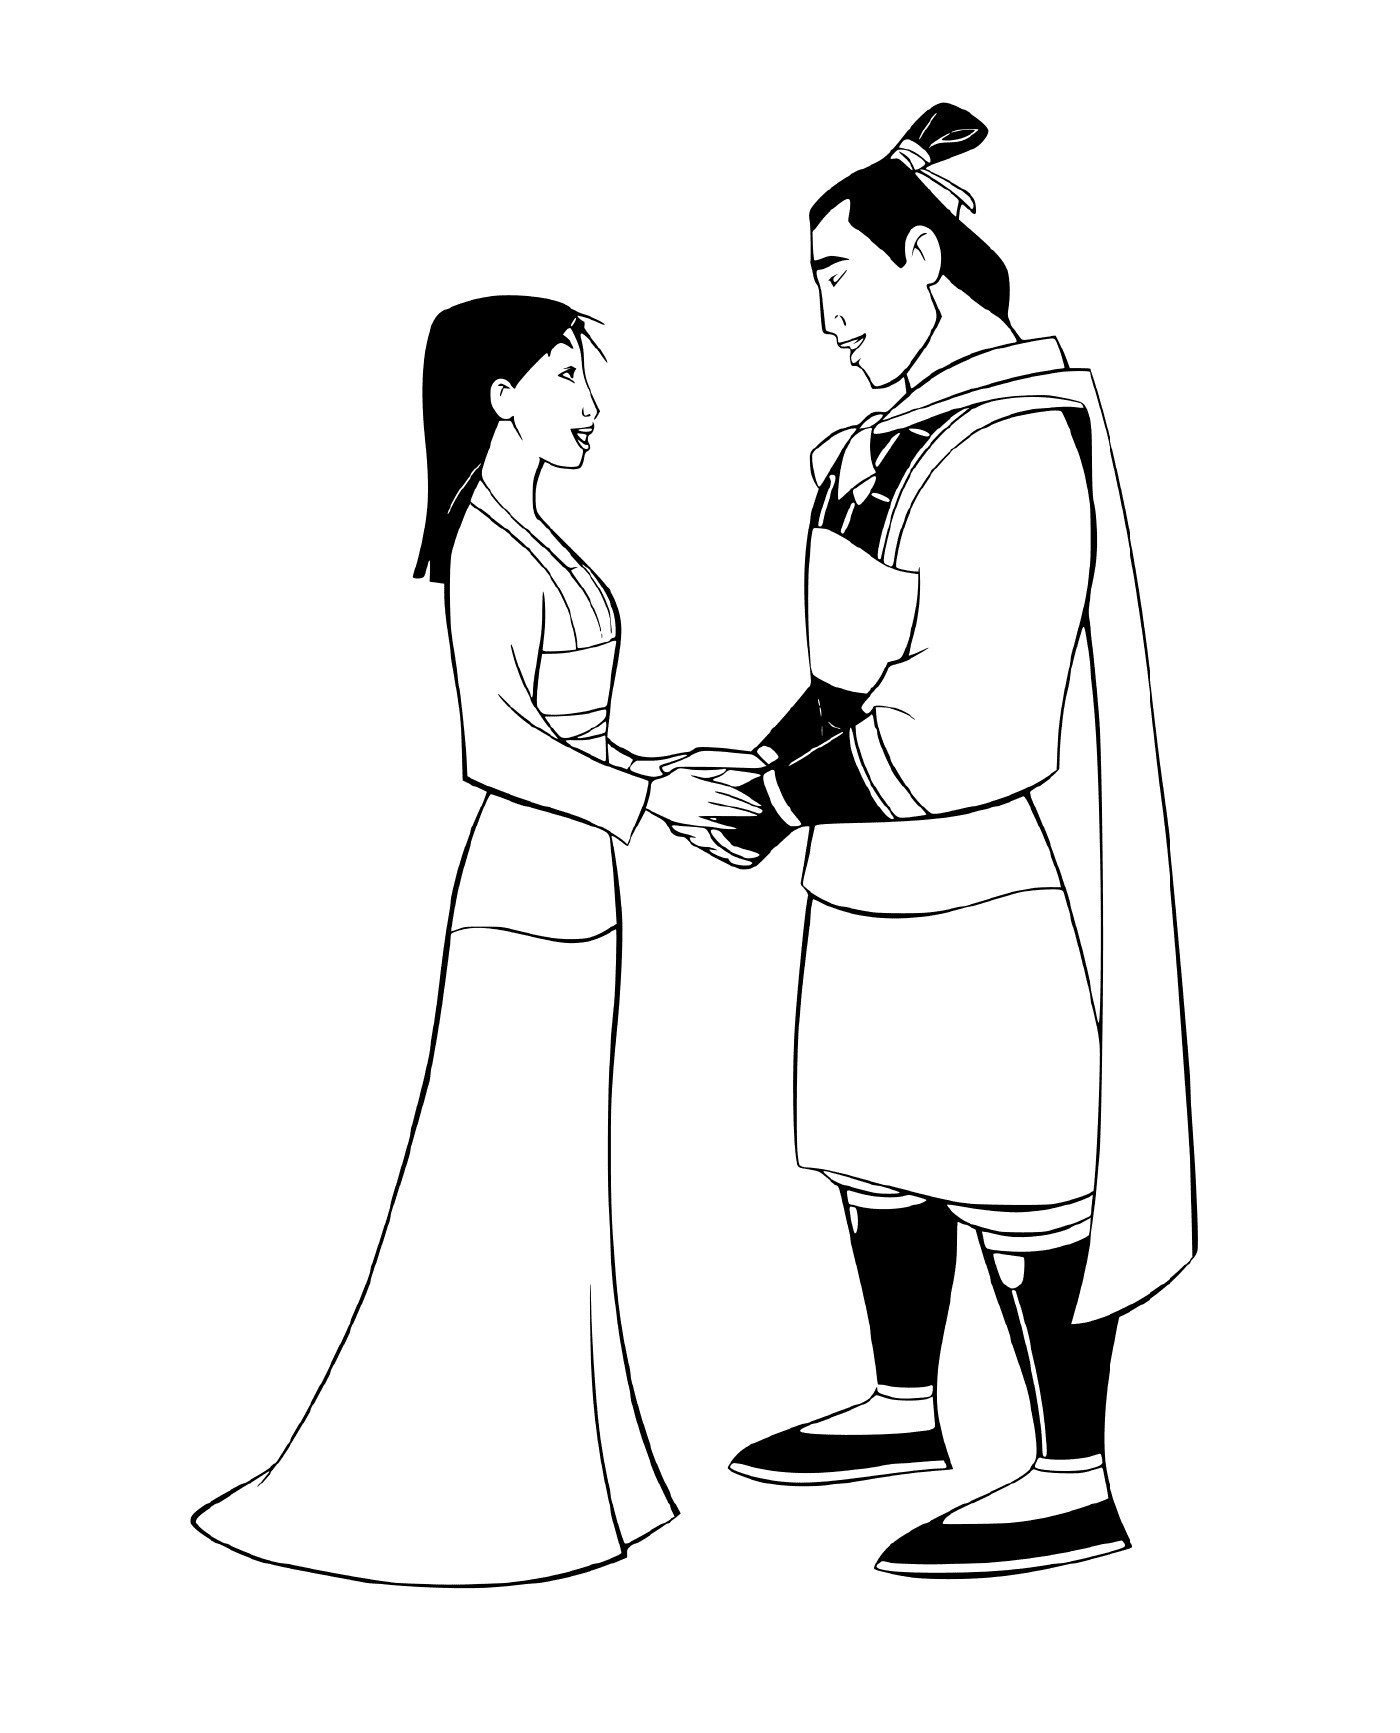   Mulan et Li Shang, complices 